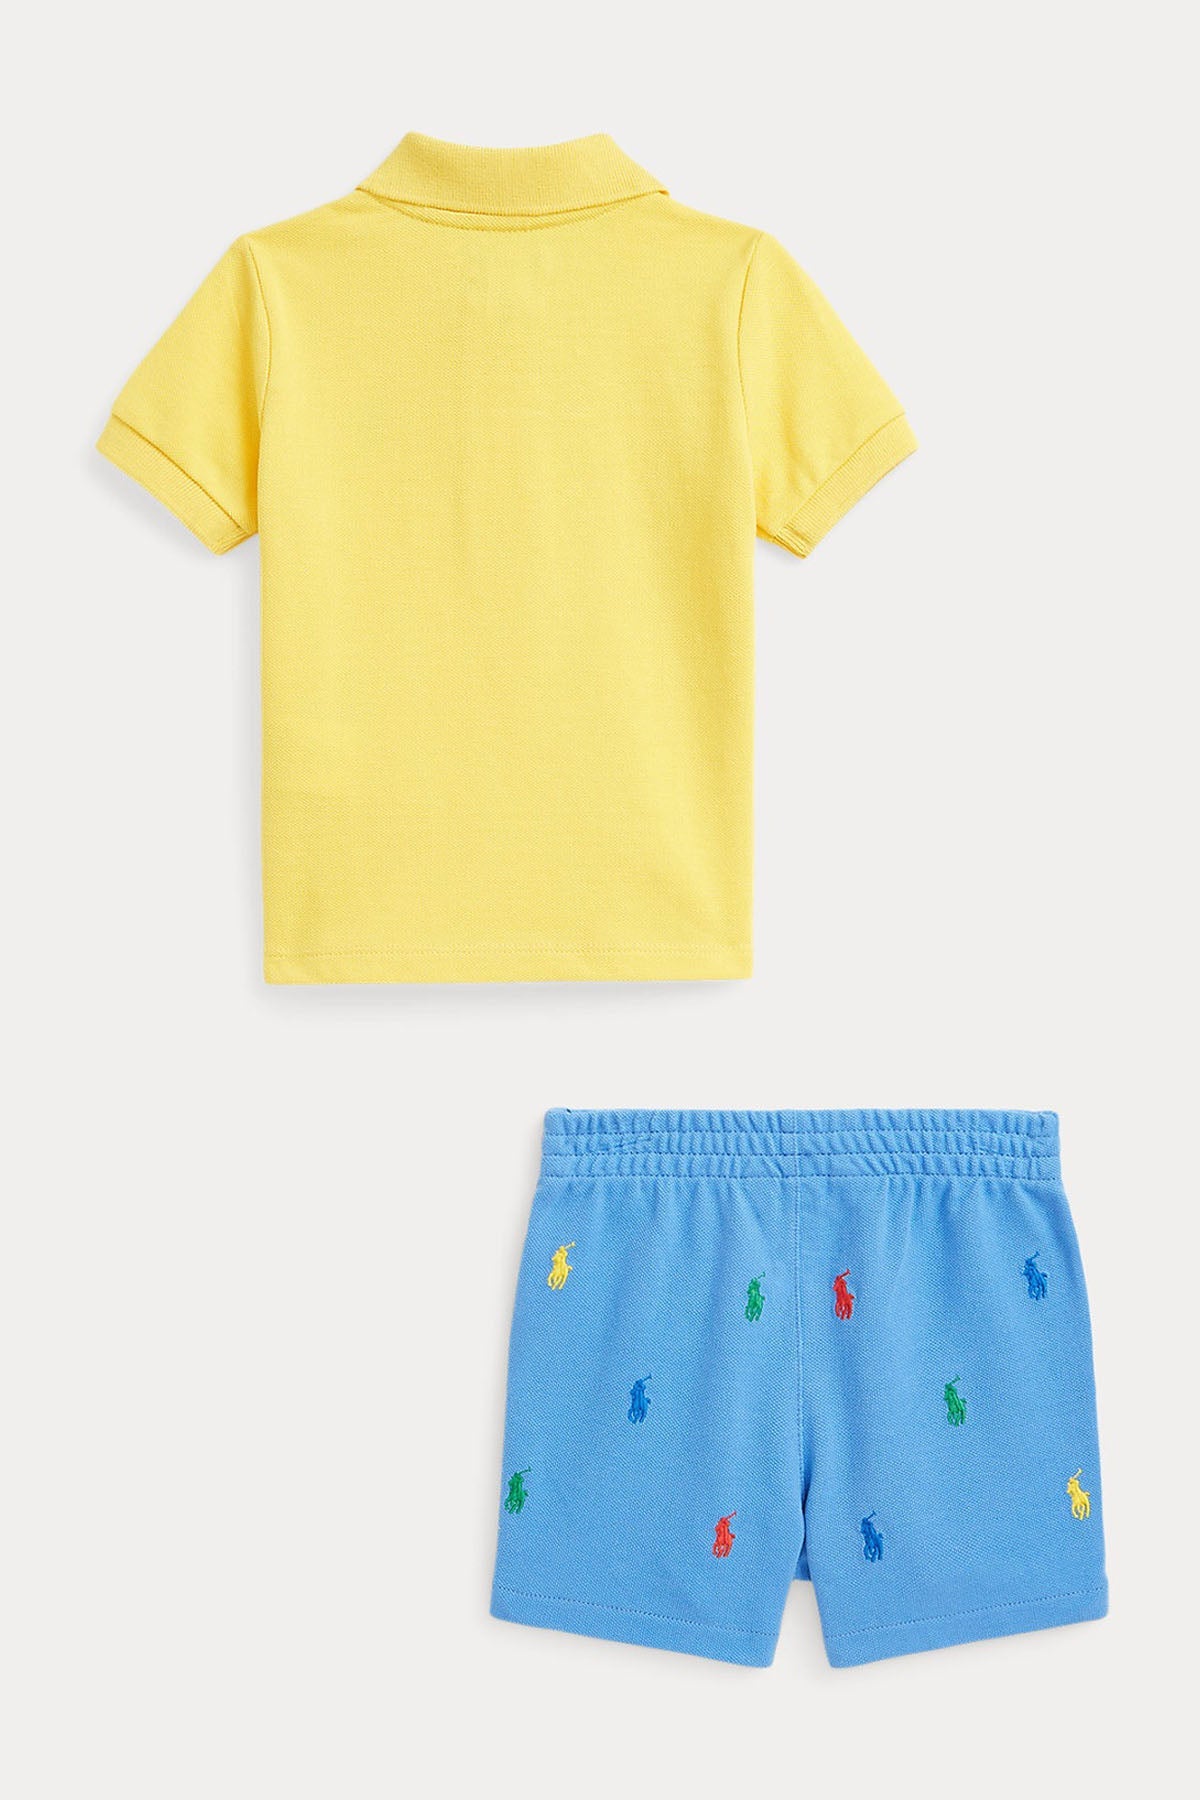 Polo Ralph Lauren Kids 12-18 Aylık Erkek Bebek T-shirt - Şort Set